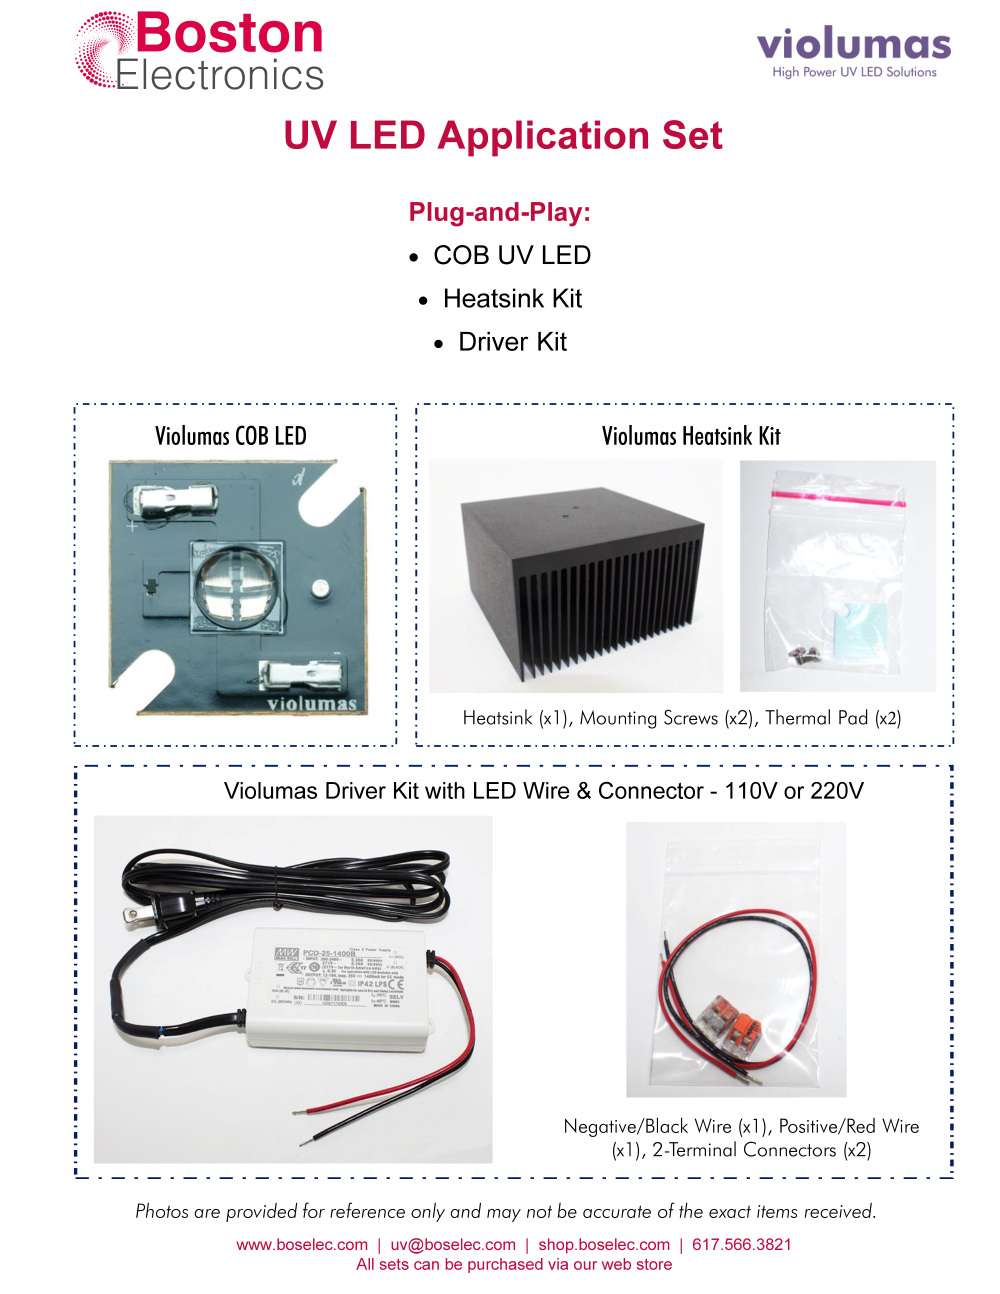 Plug-and-Play UV LED Application Sets - UV LED/Heat Sink/Driver